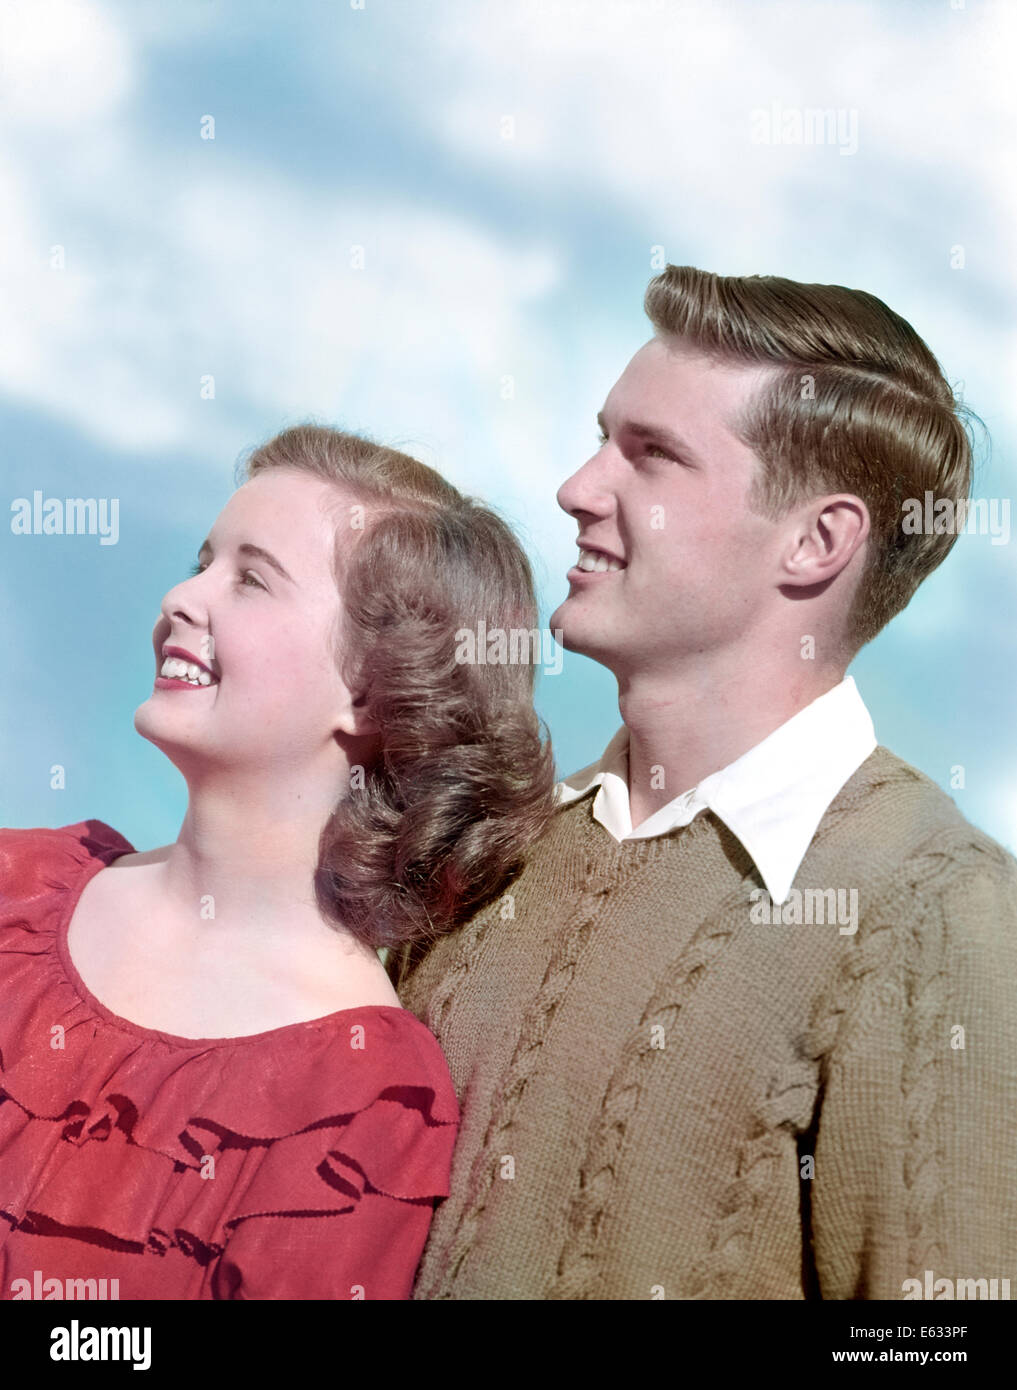 1940s 1950s PORTRAIT PROFILE SMILING TEEN COUPLE Stock Photo